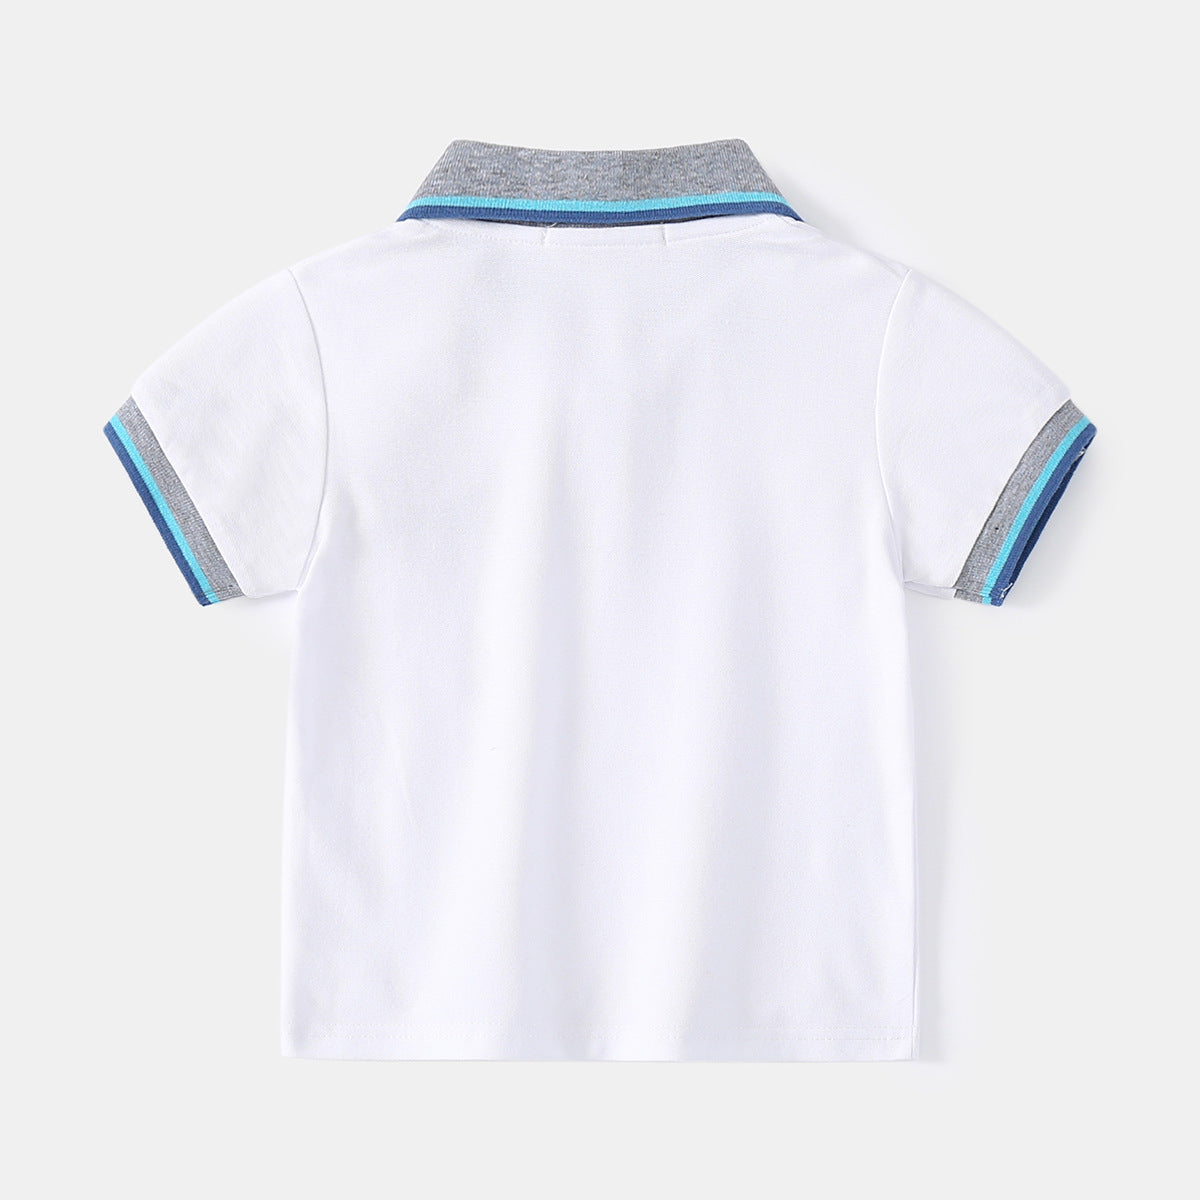 [513555] - Atasan Kaos Polo Kerah Lengan Pendek Anak Laki-laki - Motif Pocket Button